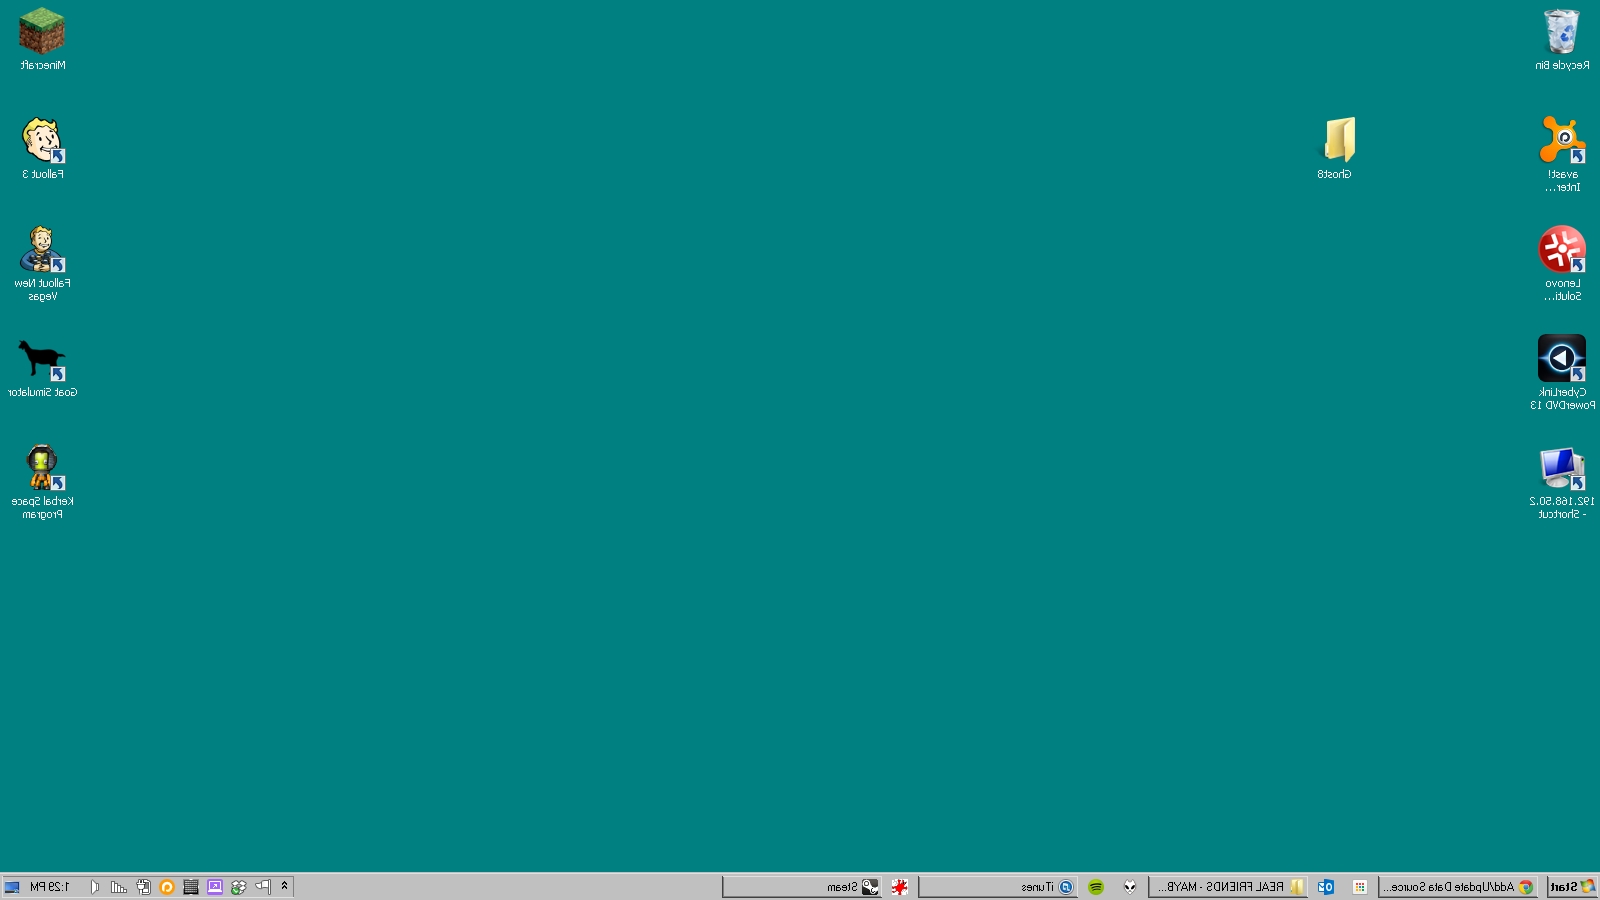 13myjoh Windows 95 Wallpaper Pack Desktop Of Windows 98 1600x900 Wallpaper Teahub Io